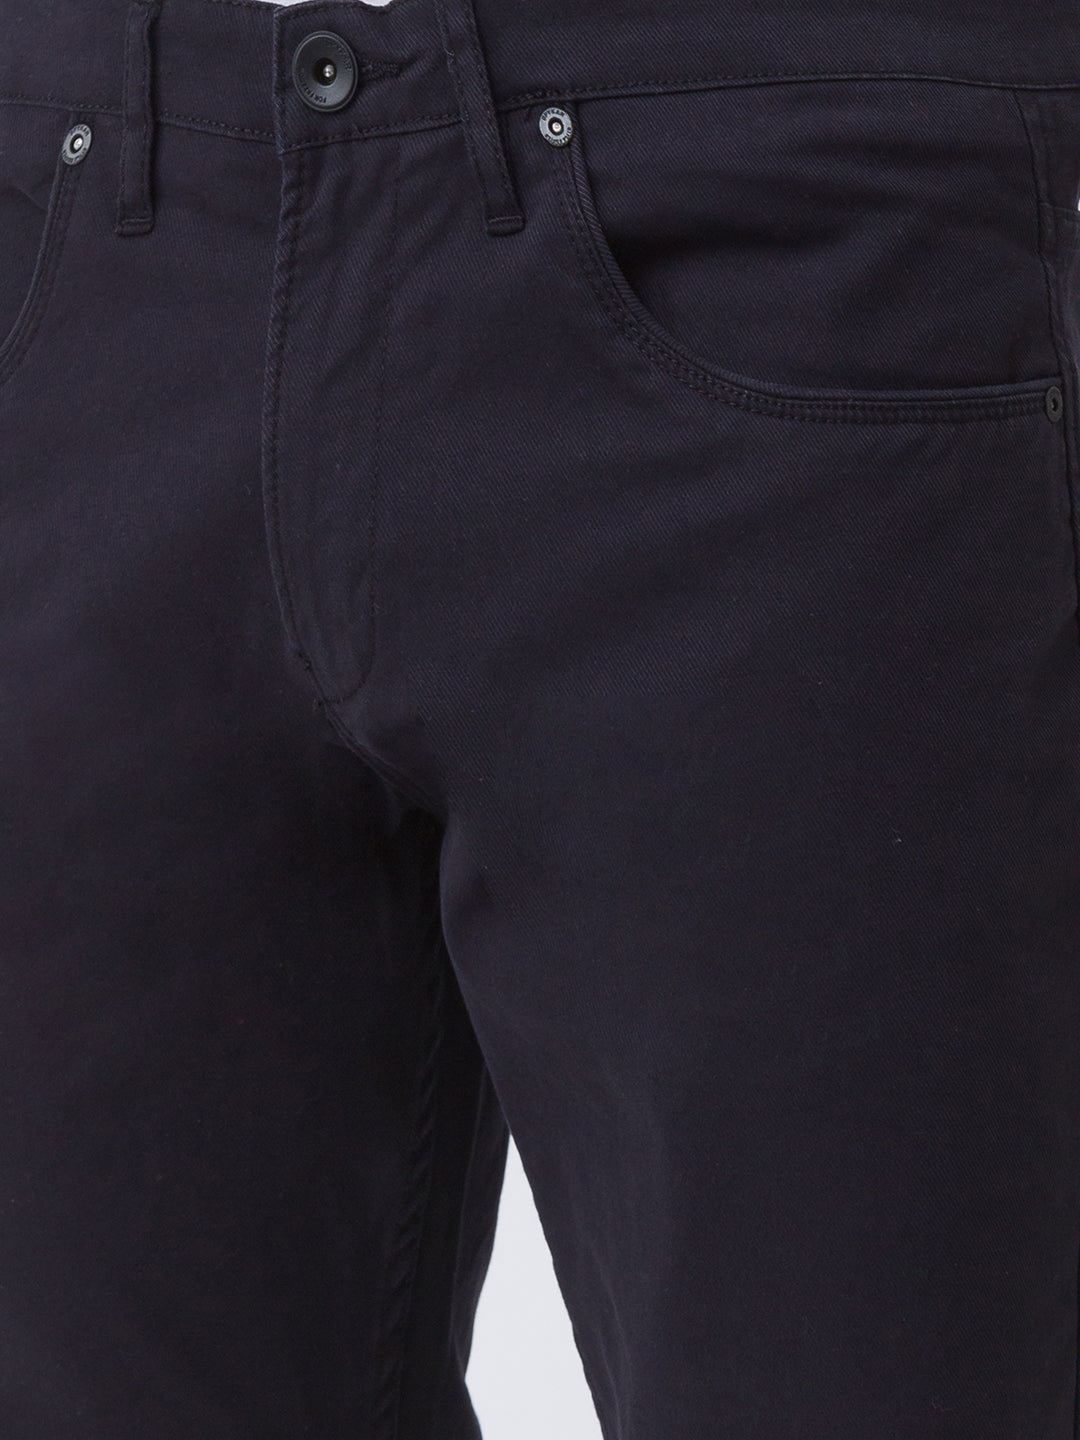 Spykar Black Cotton Slim Fit Tapered Length Trousers For Men